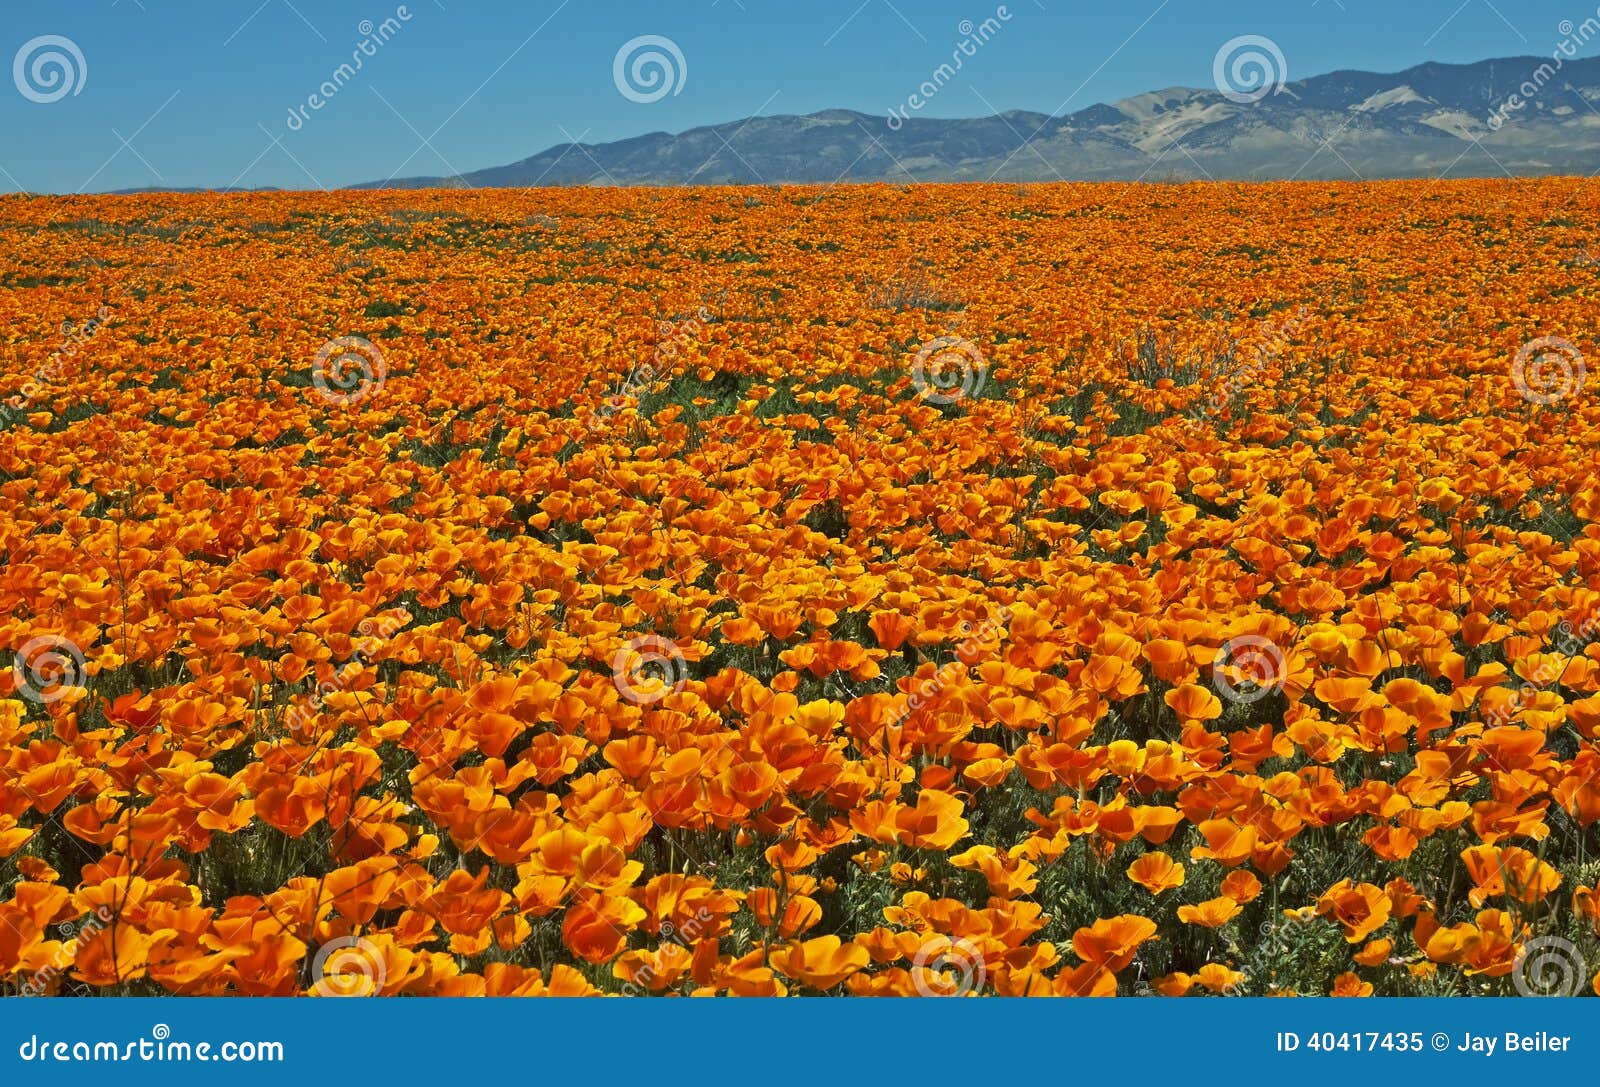 ocean of california poppies